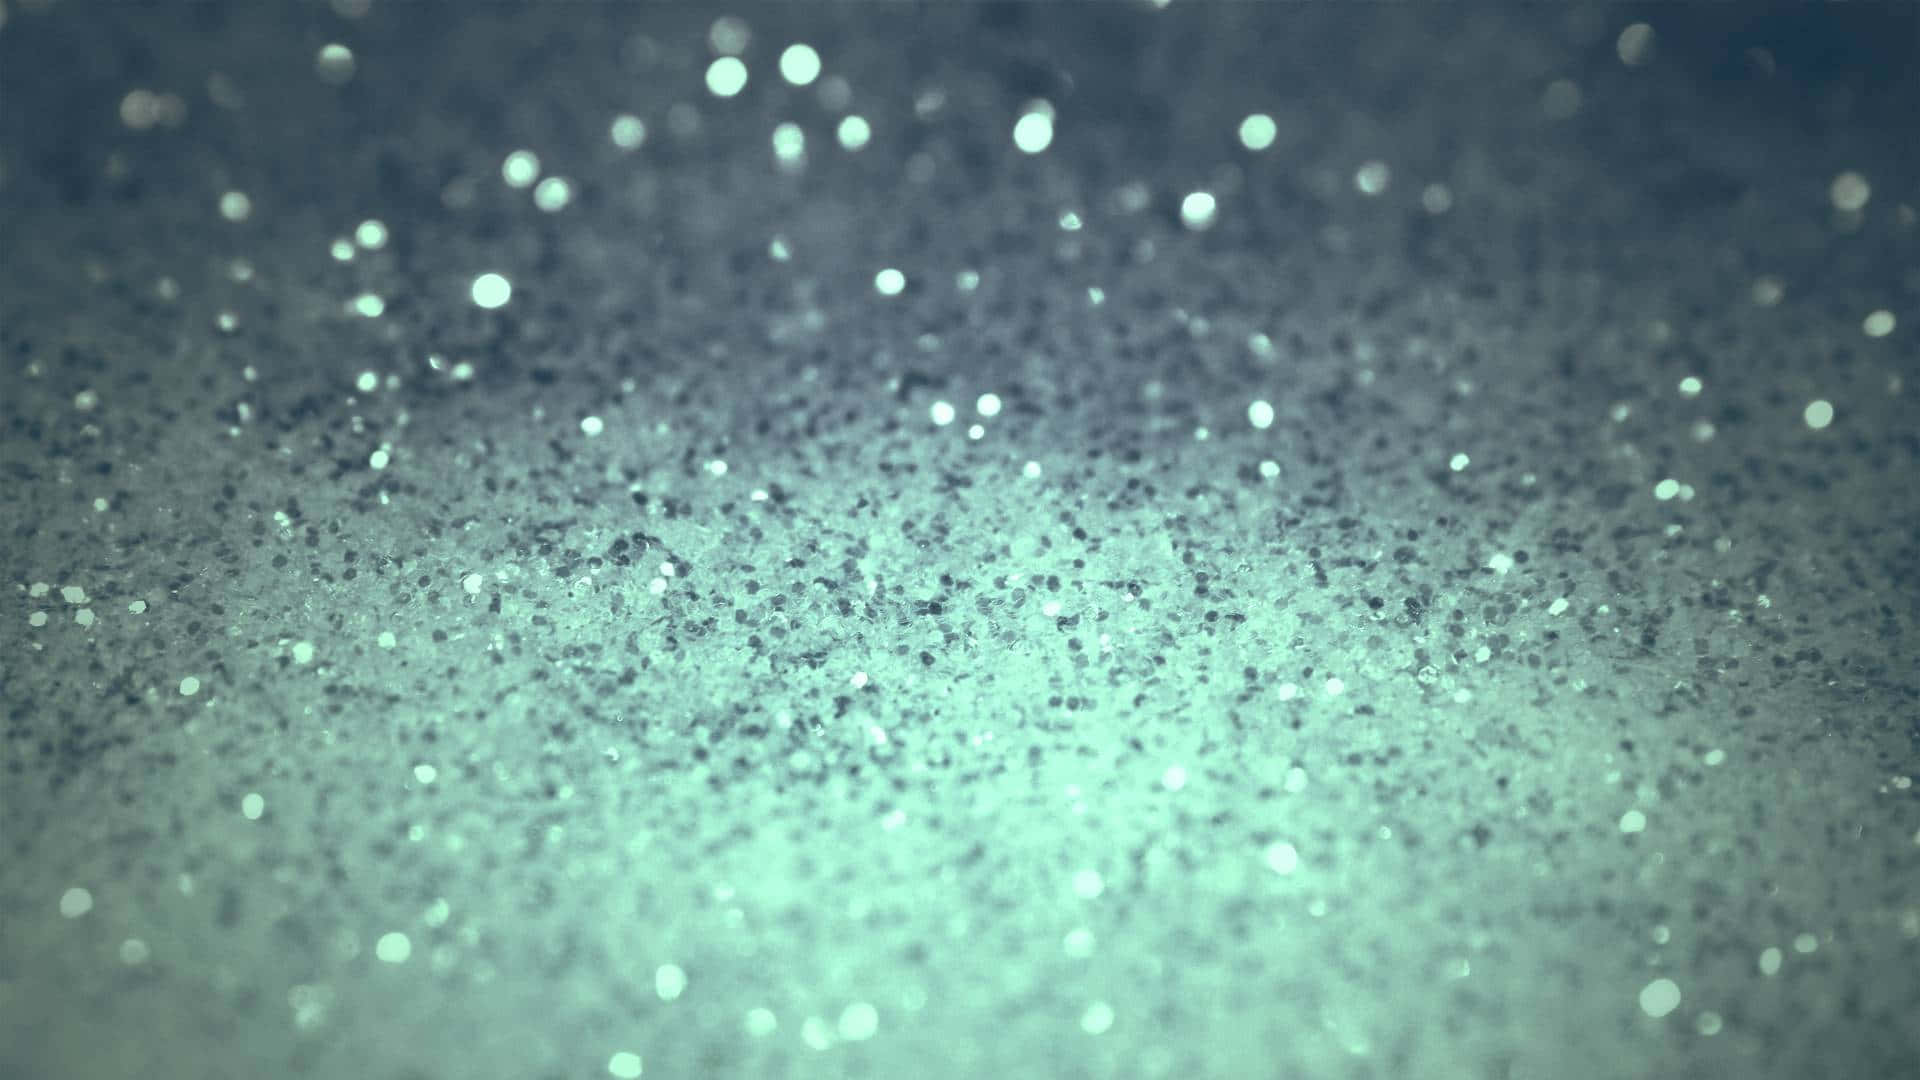 Sparkling teal background full of glitter.